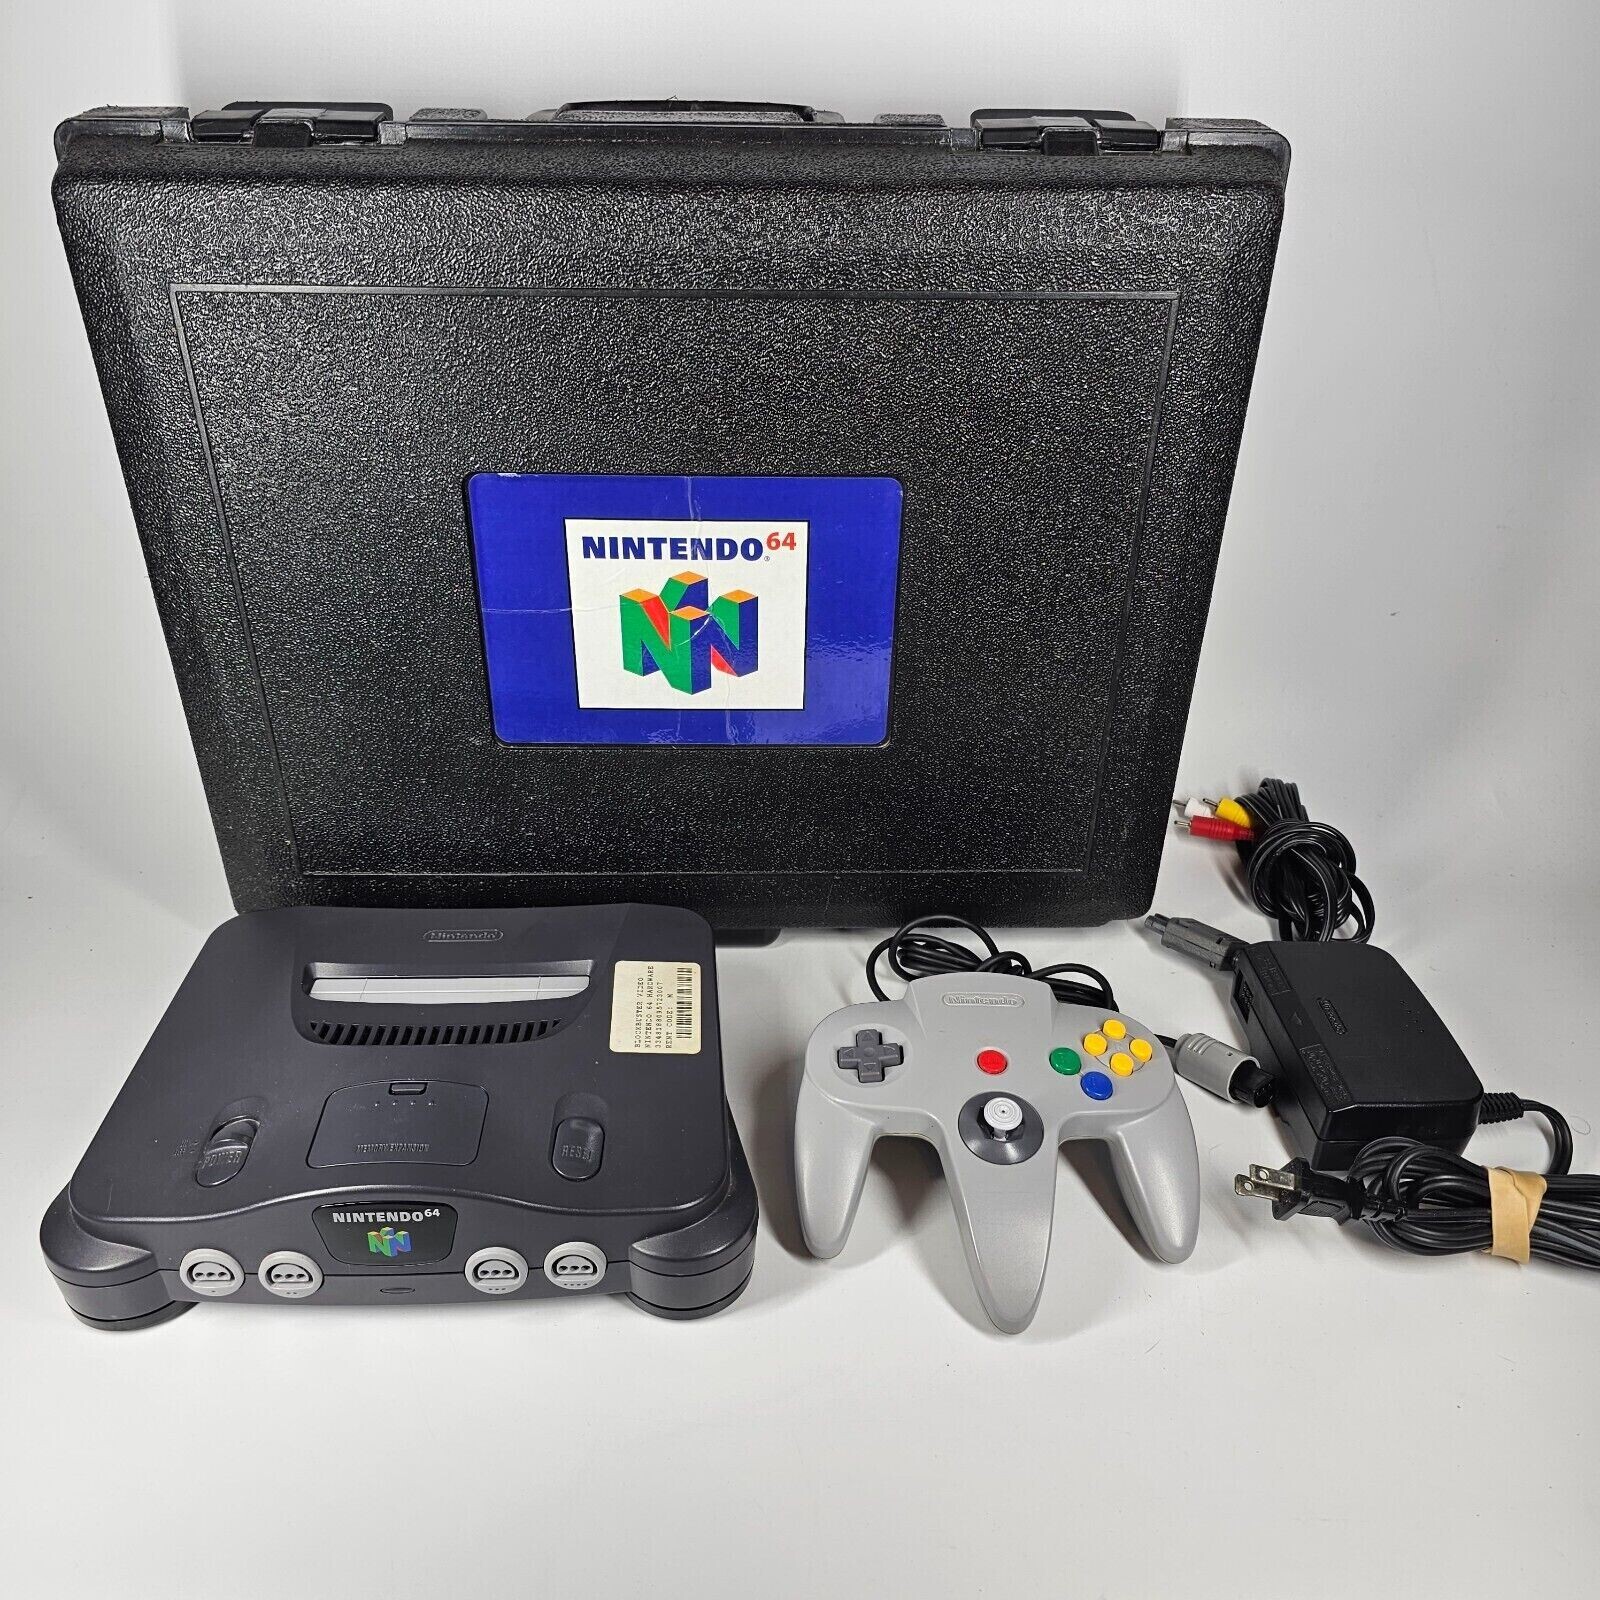  Nintendo 64 Blockbuster Suitcase